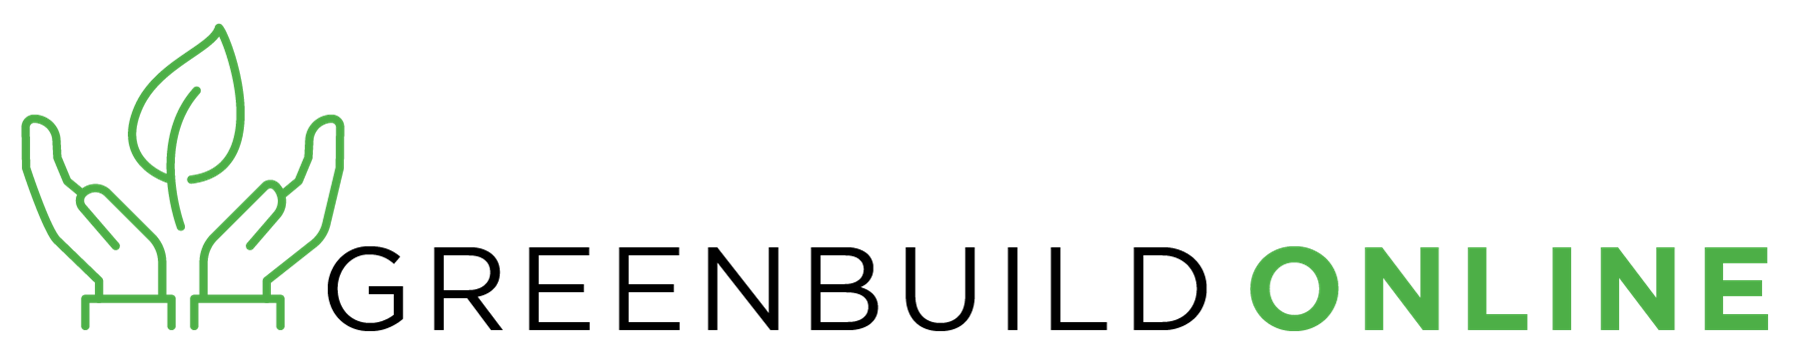 Greenbuild Online logo